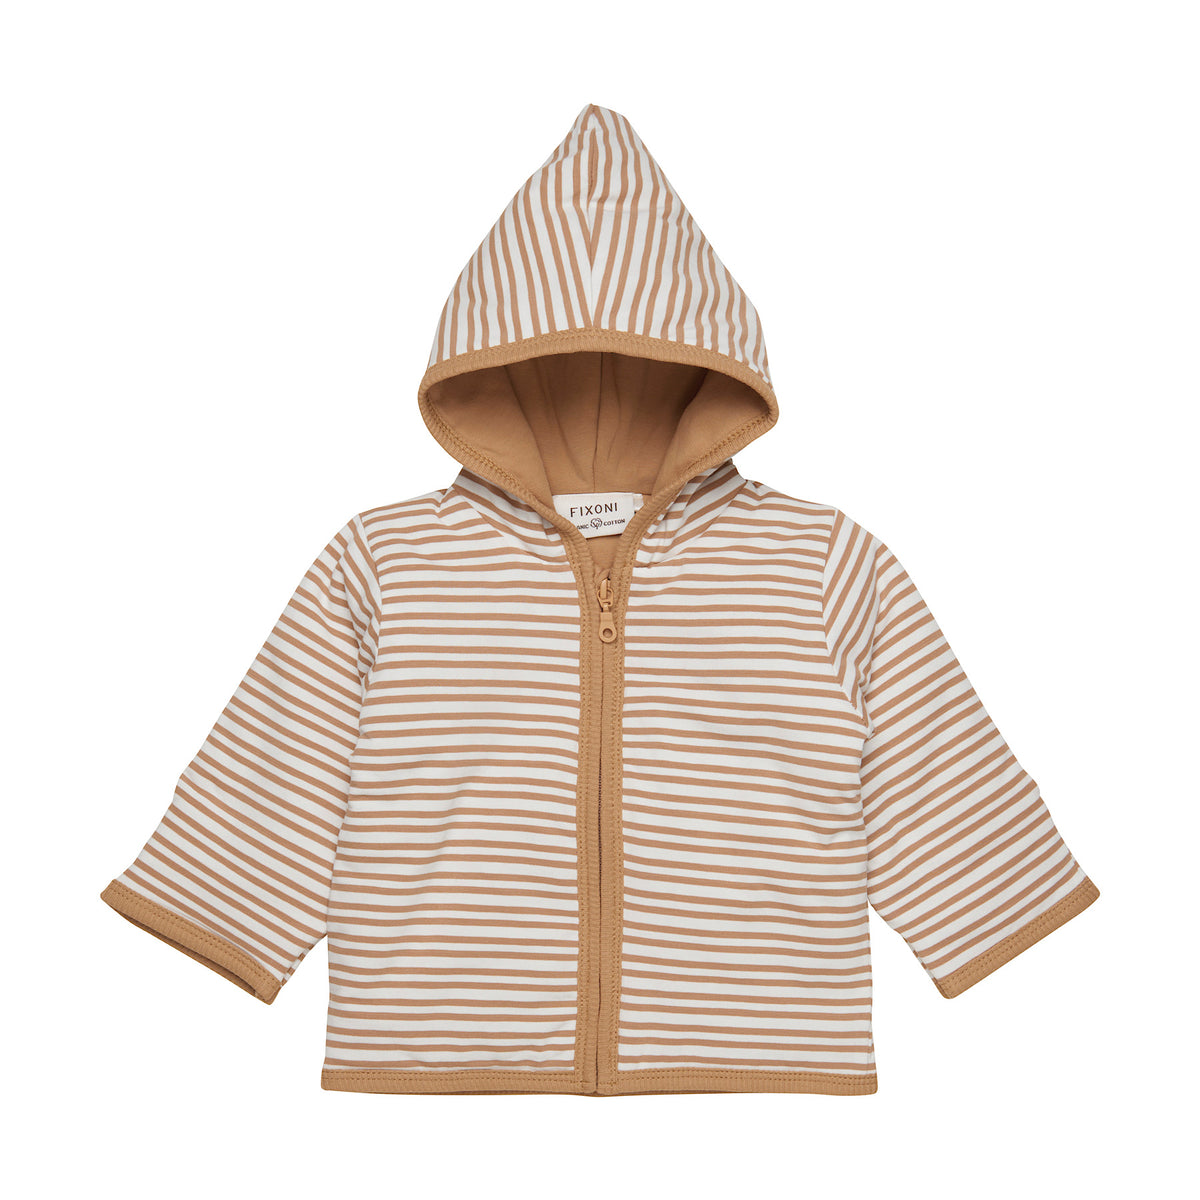 Zip Up Hooded Jacket, Tan Stripes